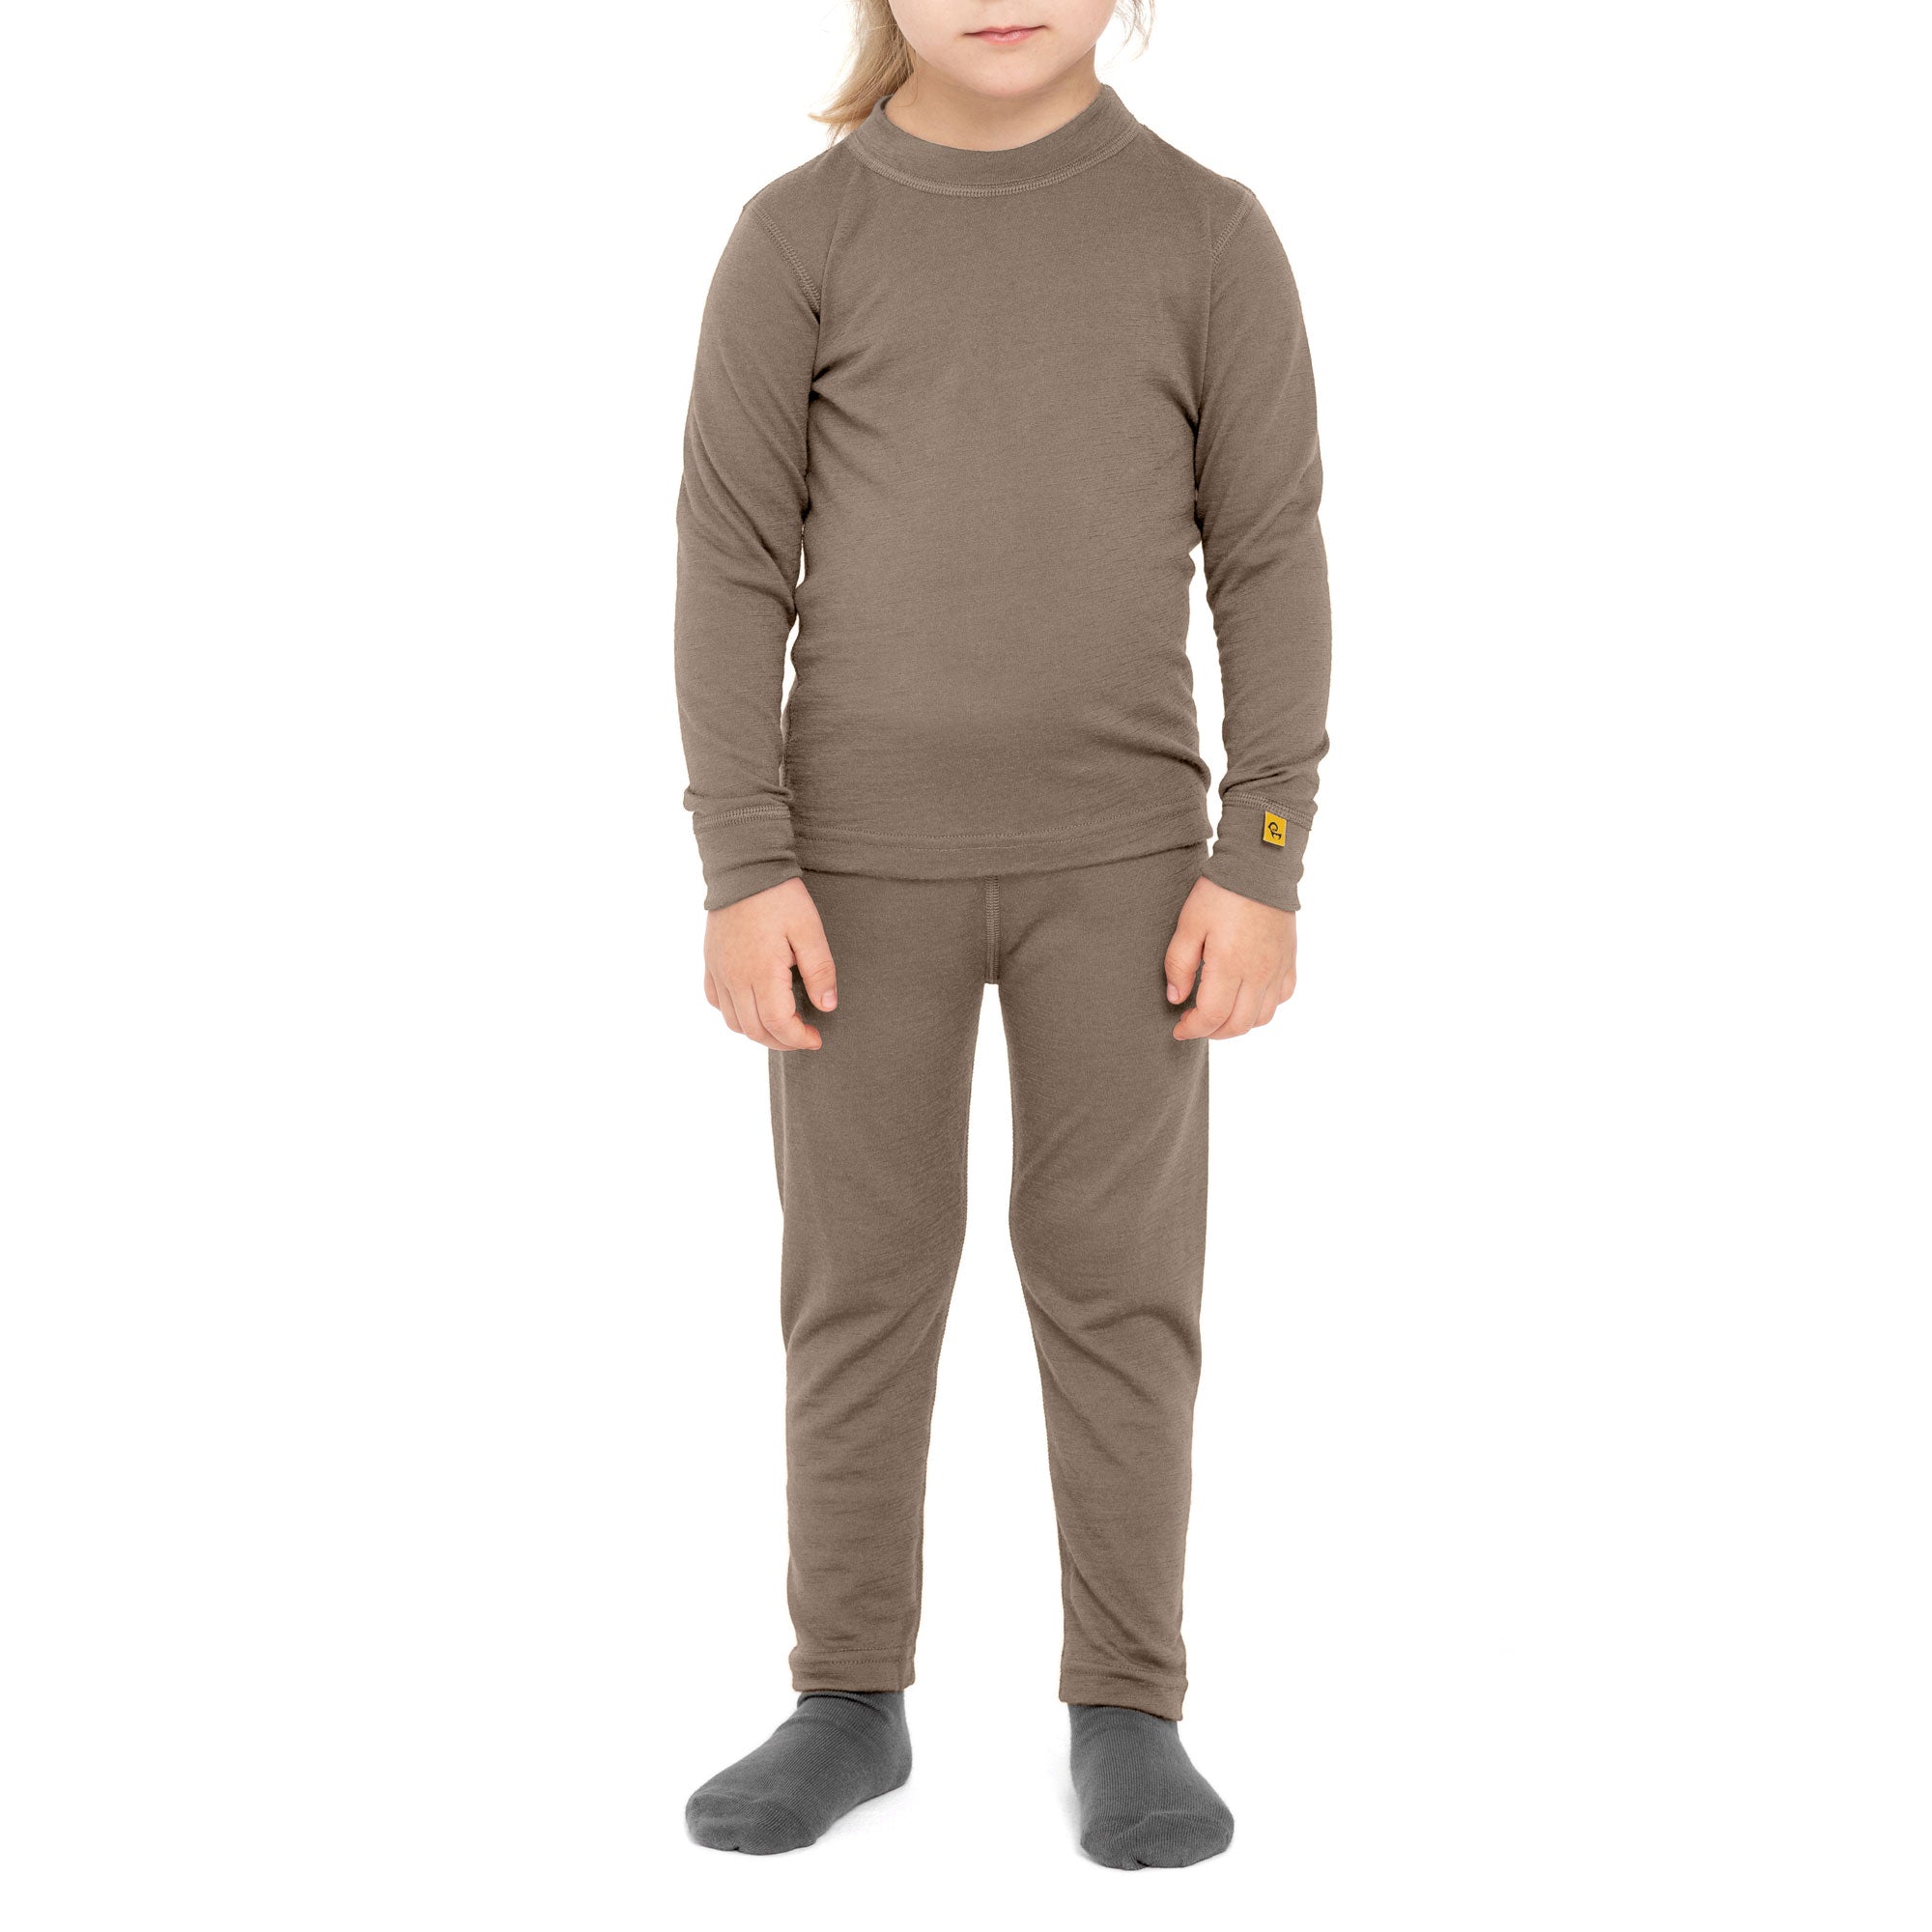 https://cdn.shopify.com/s/files/1/0218/1401/8128/products/menique-merino-kids-set-base-layer-pants-shirts-beige-1.jpg?v=1631865238